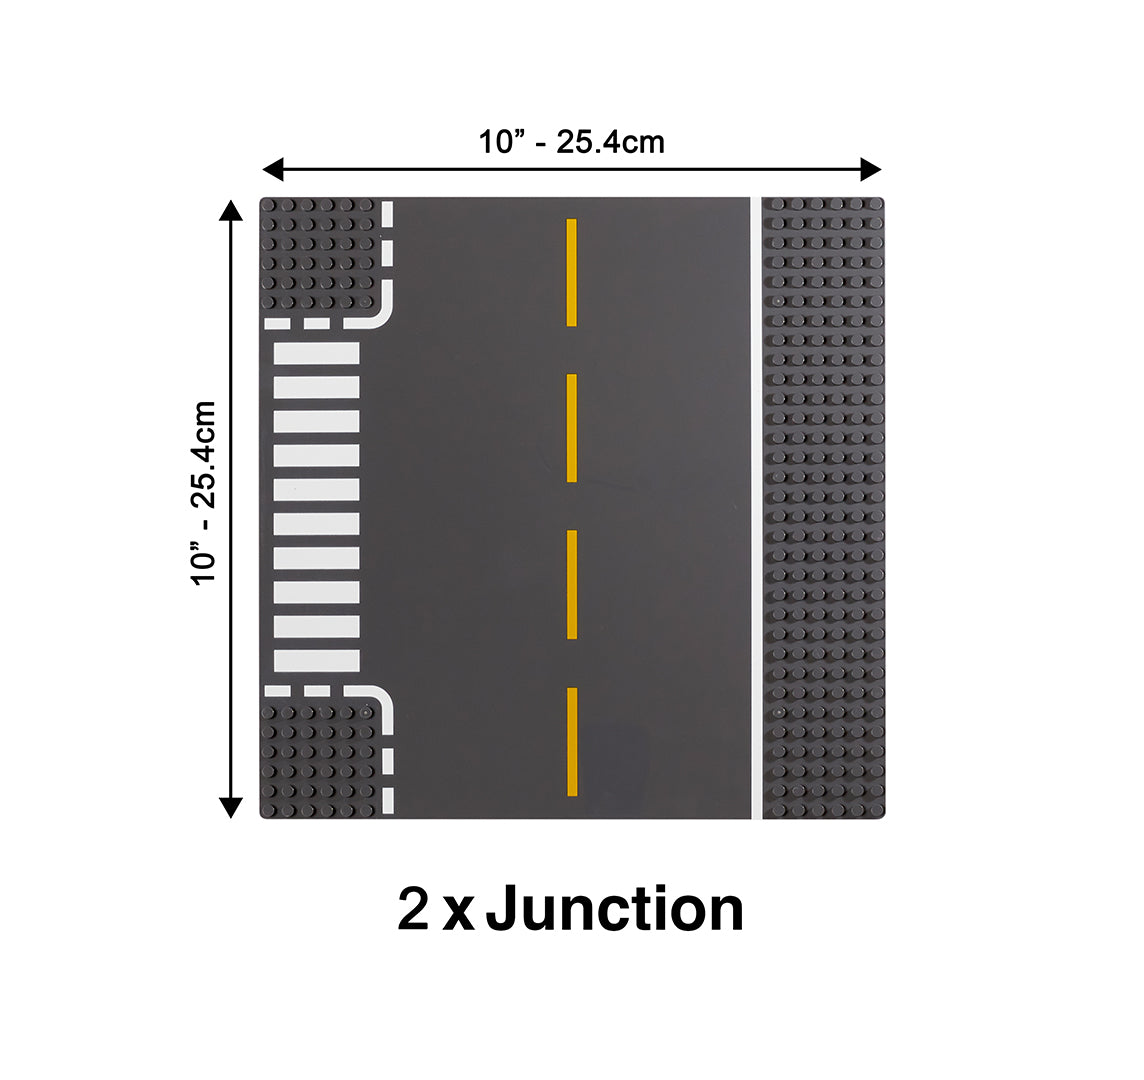 8 Building Block Road Base Plates